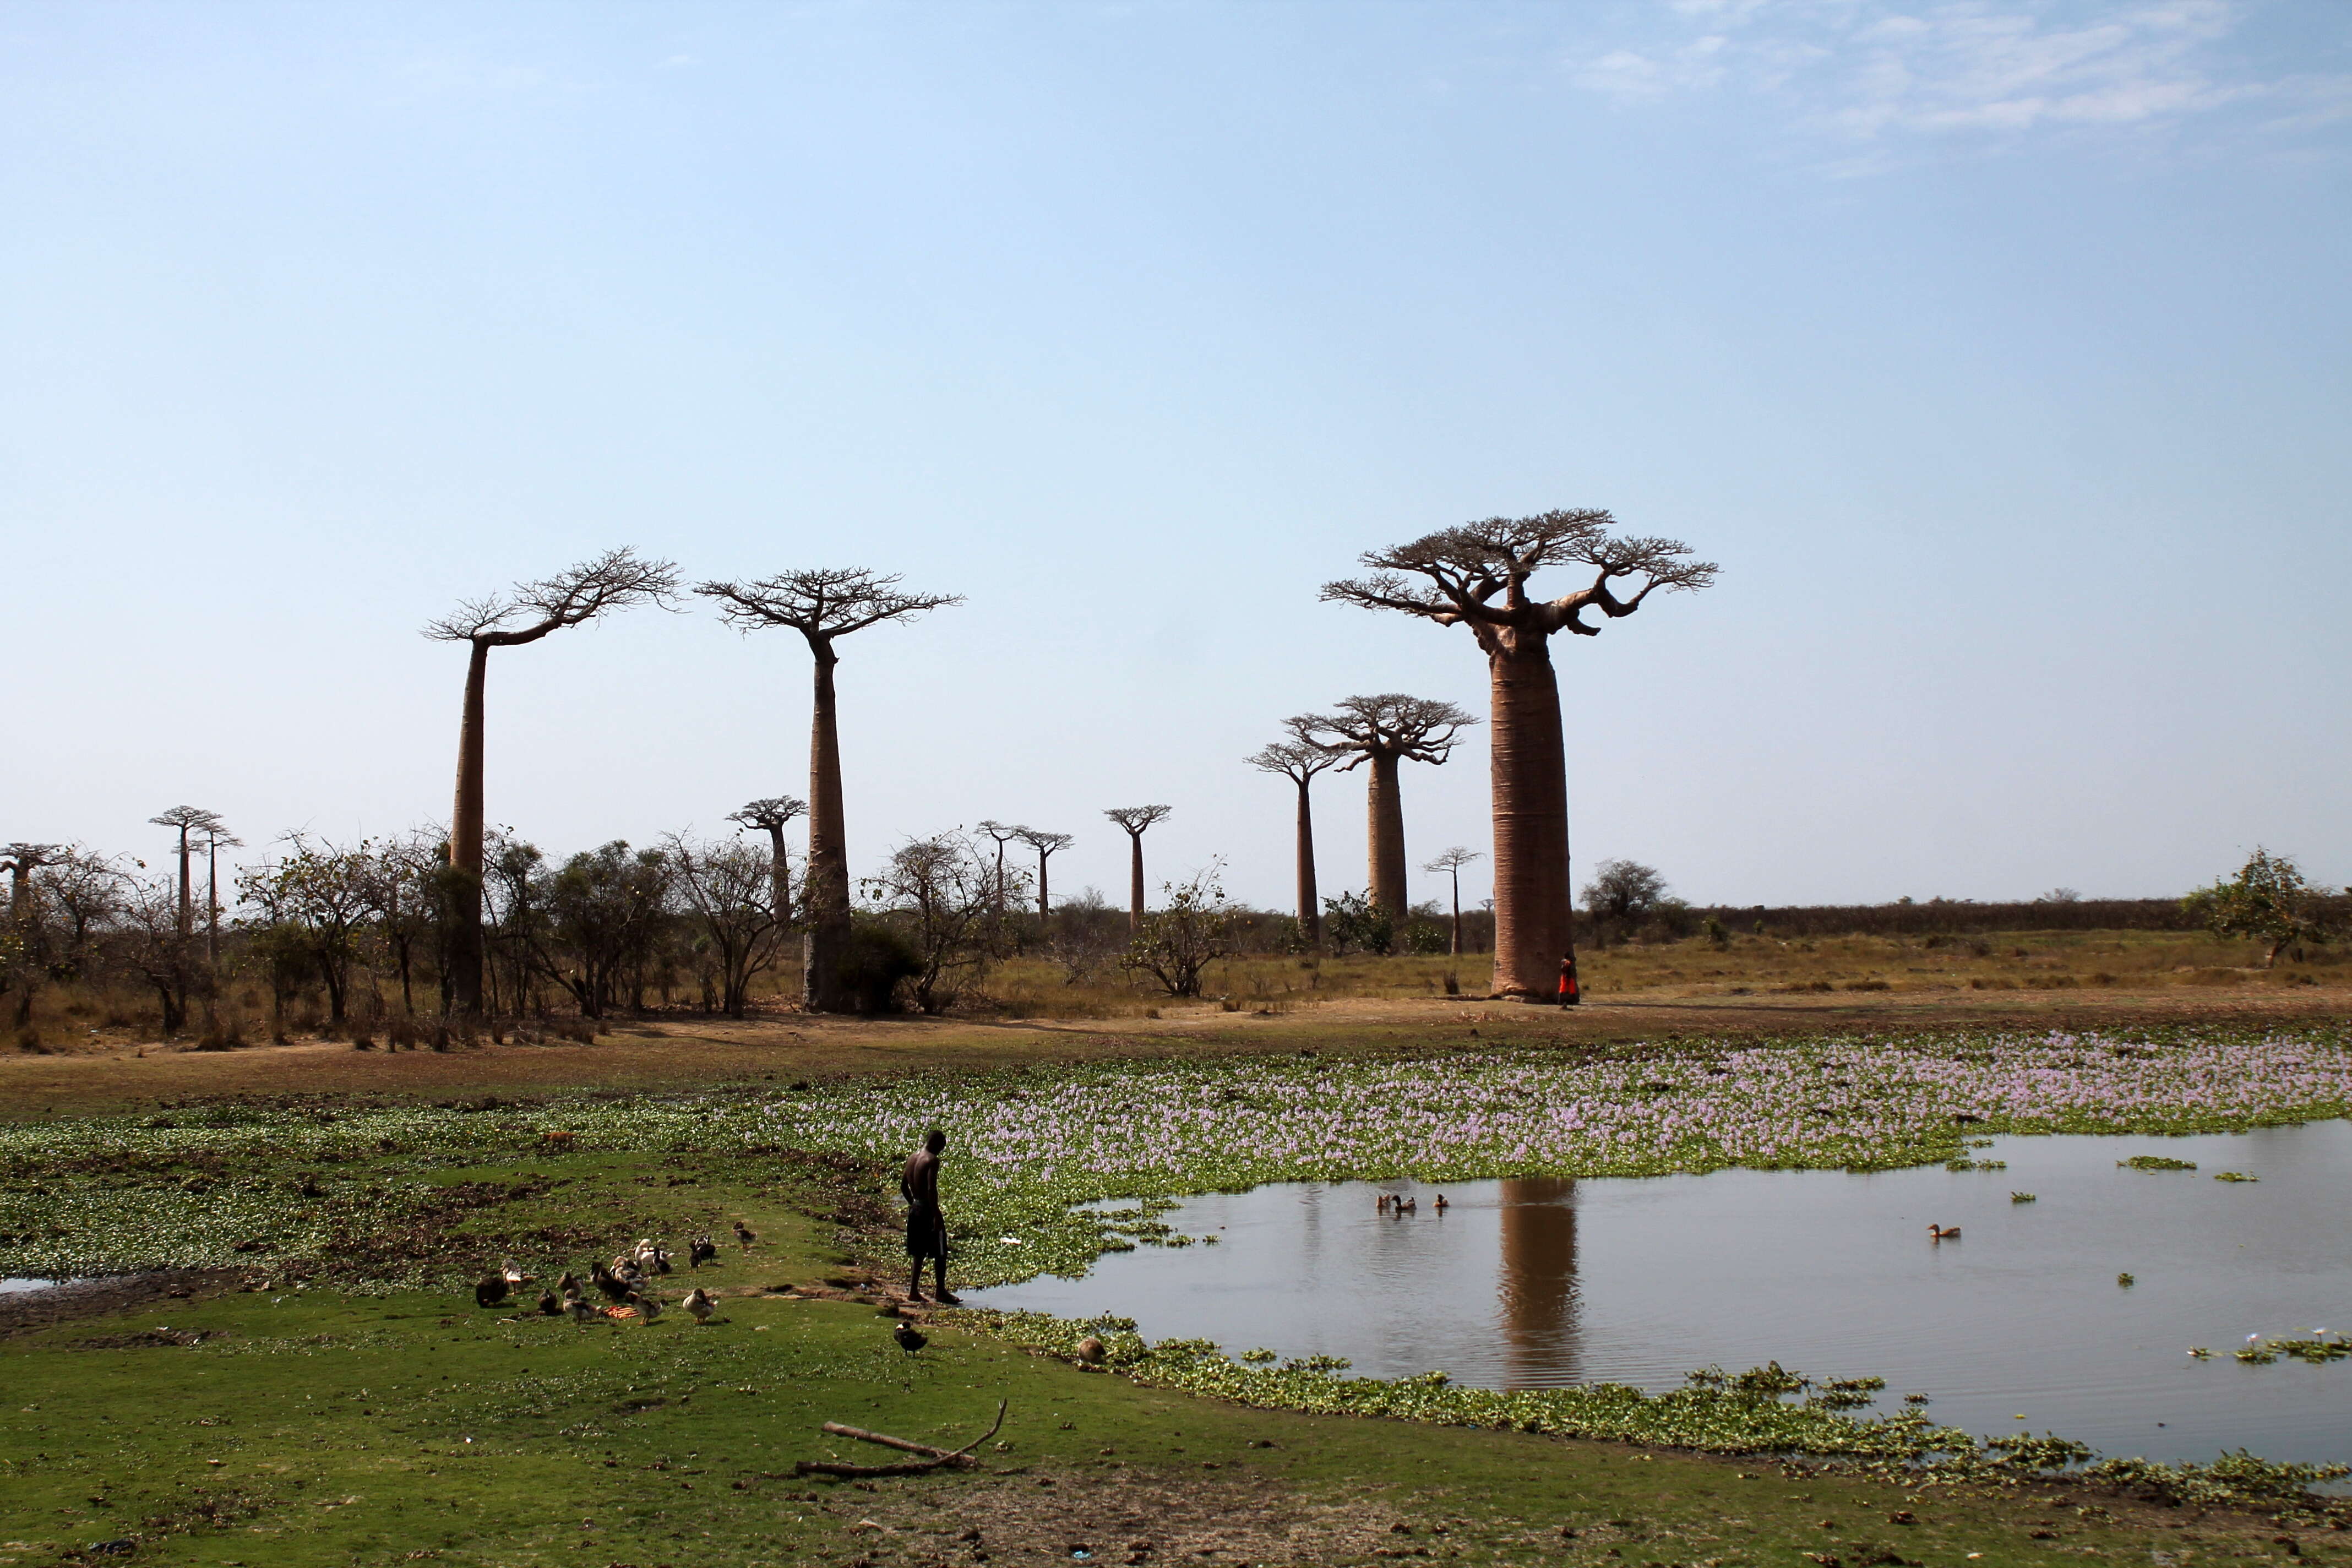 Image of Grandidier’s baobab